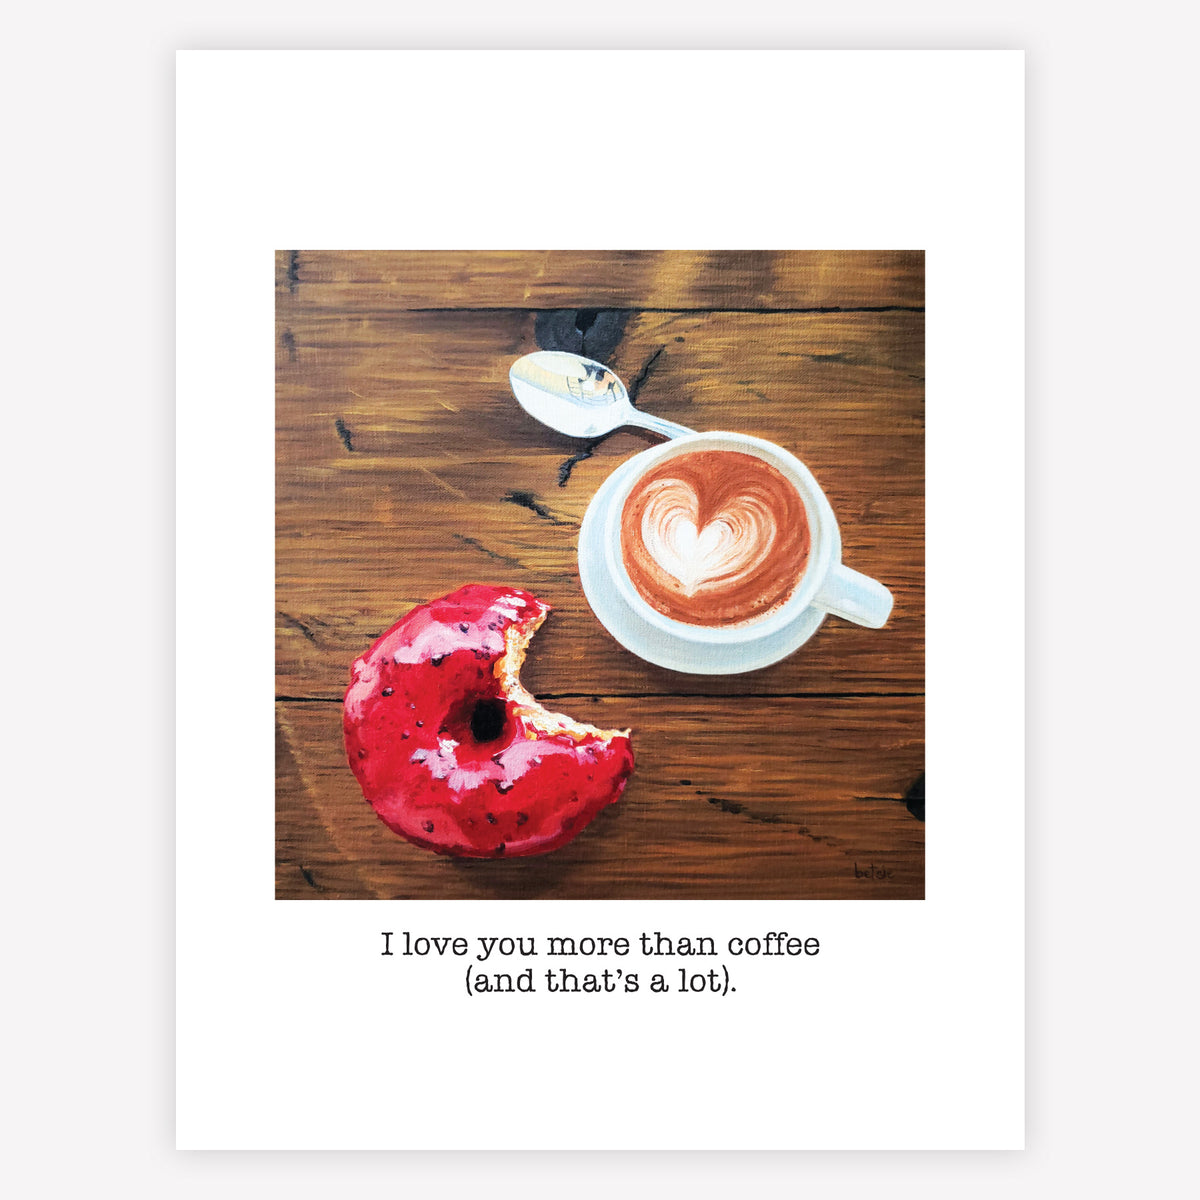 "I love you more than coffee" Greeting Card